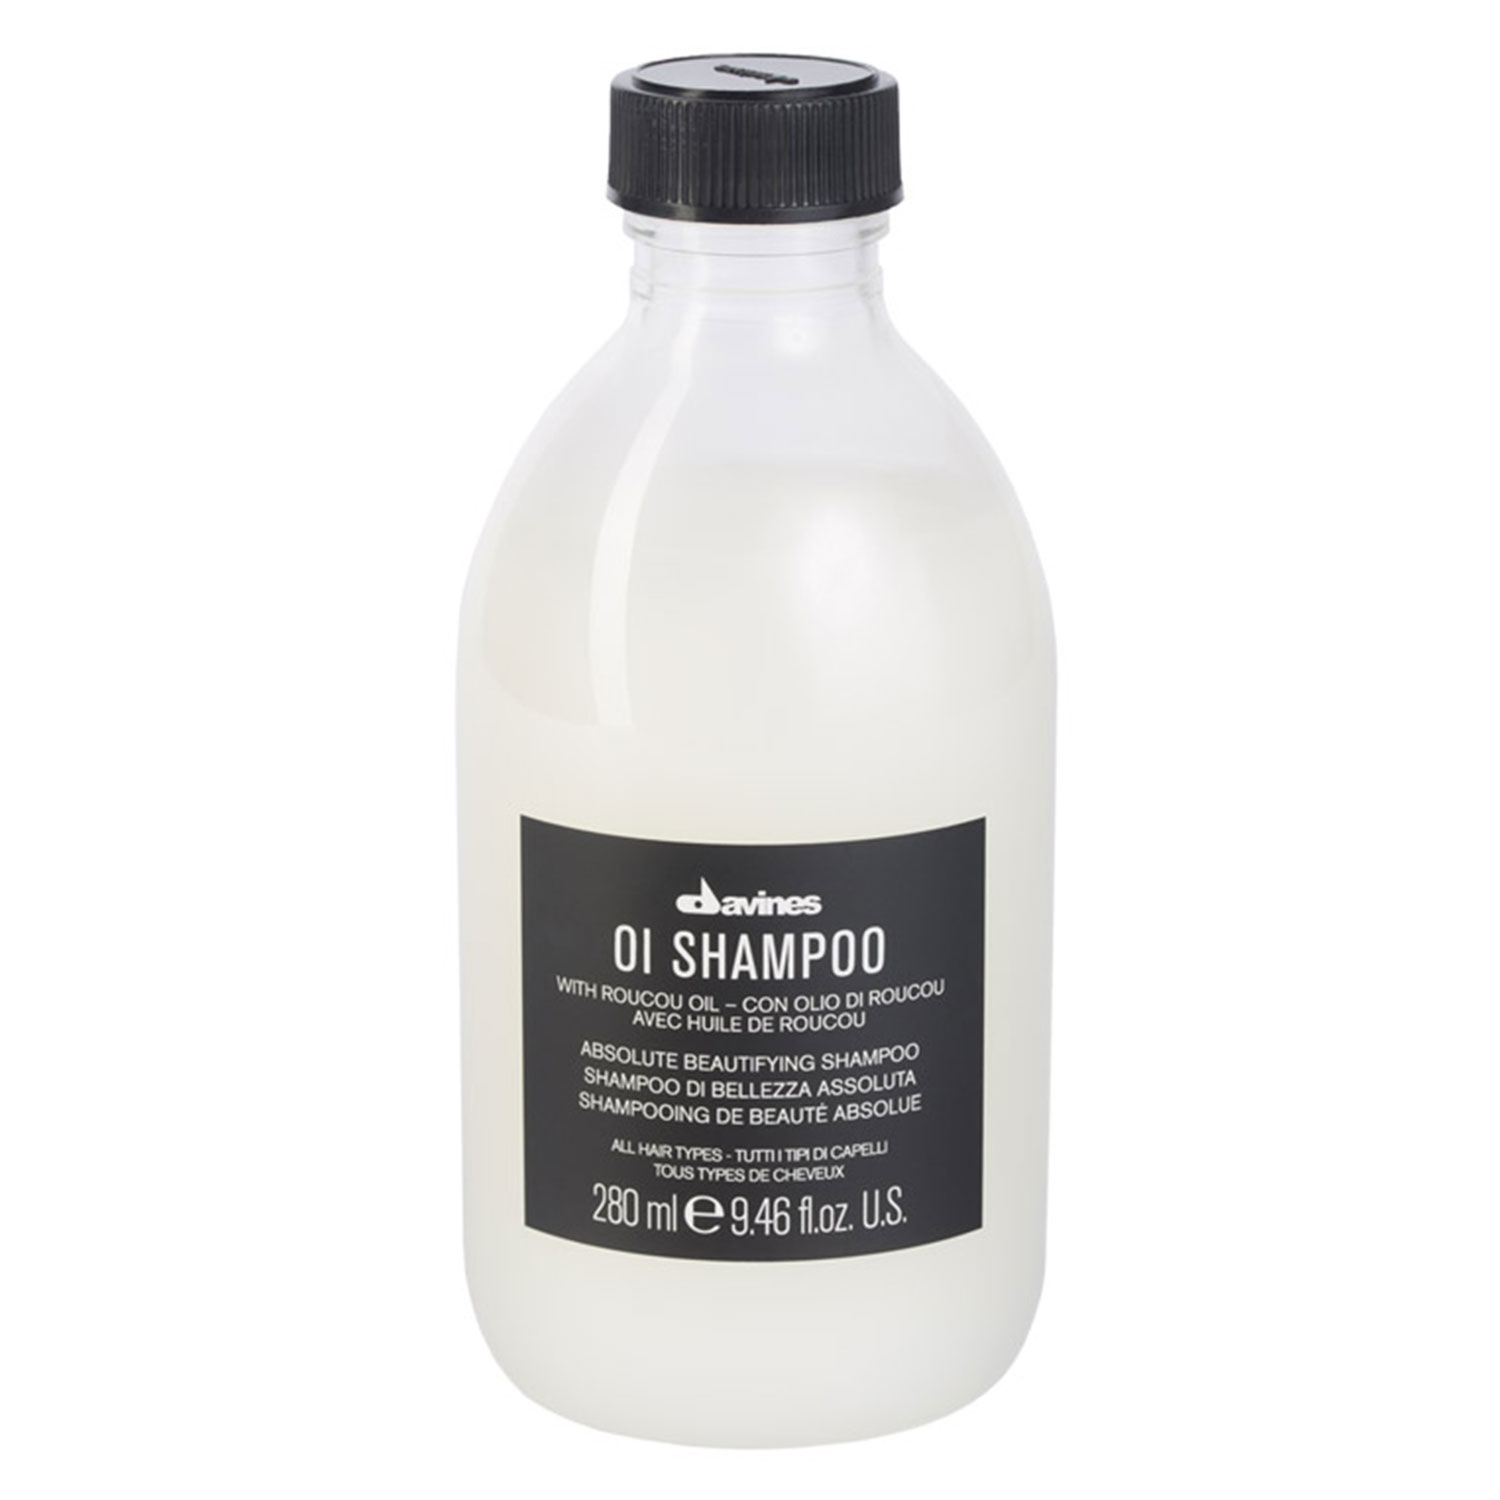 Produktbild von Oi - Absolute Beautifying Shampoo